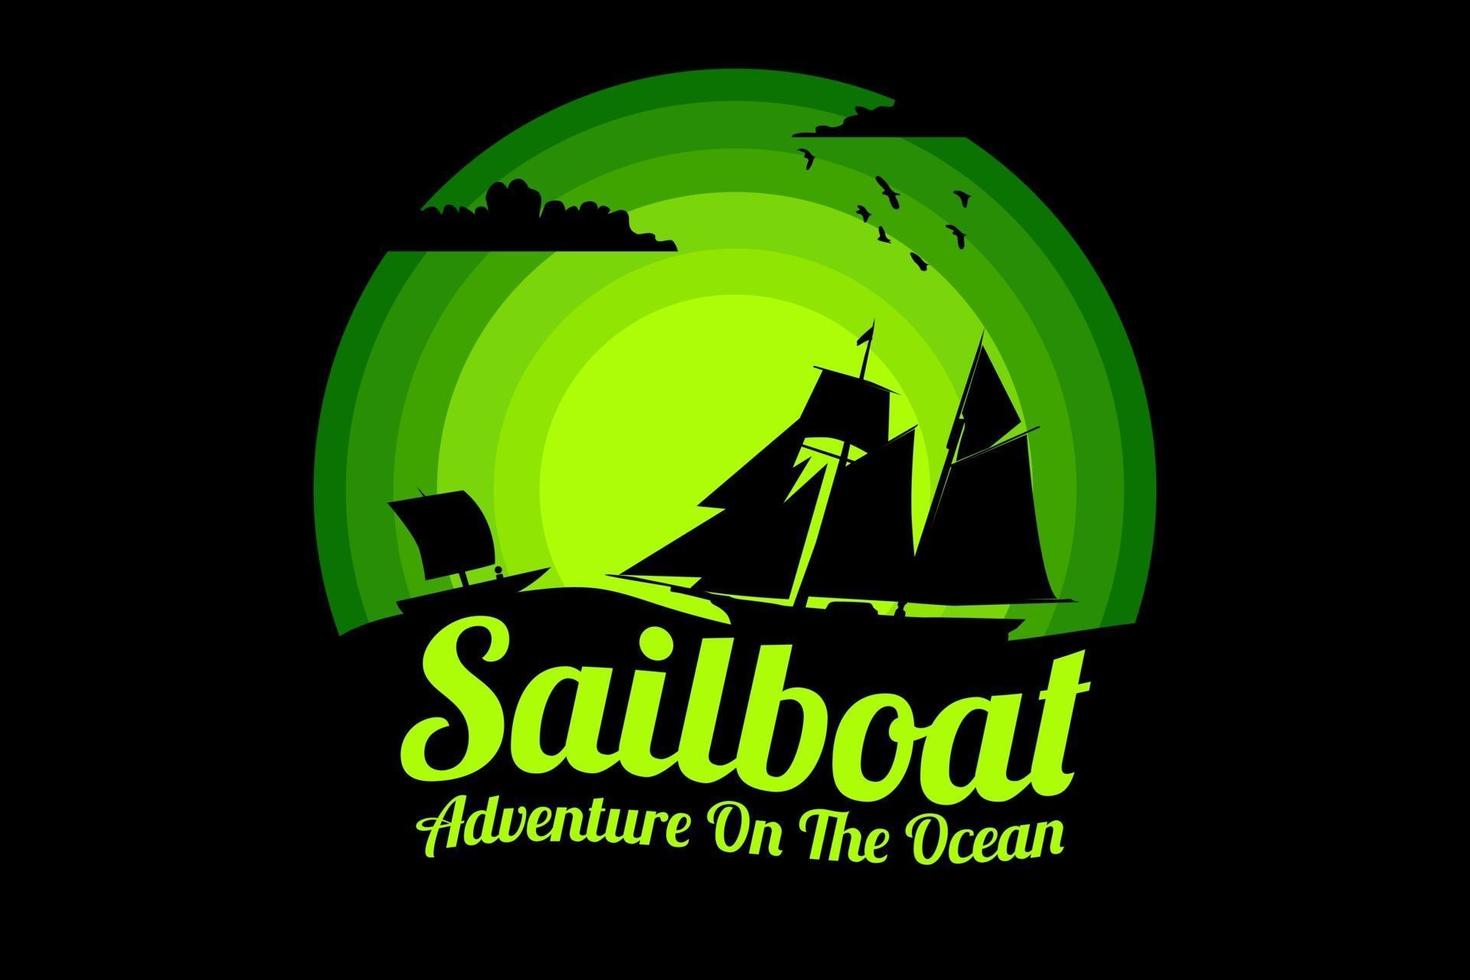 Sailboat adventure on the ocean silhouette design vector